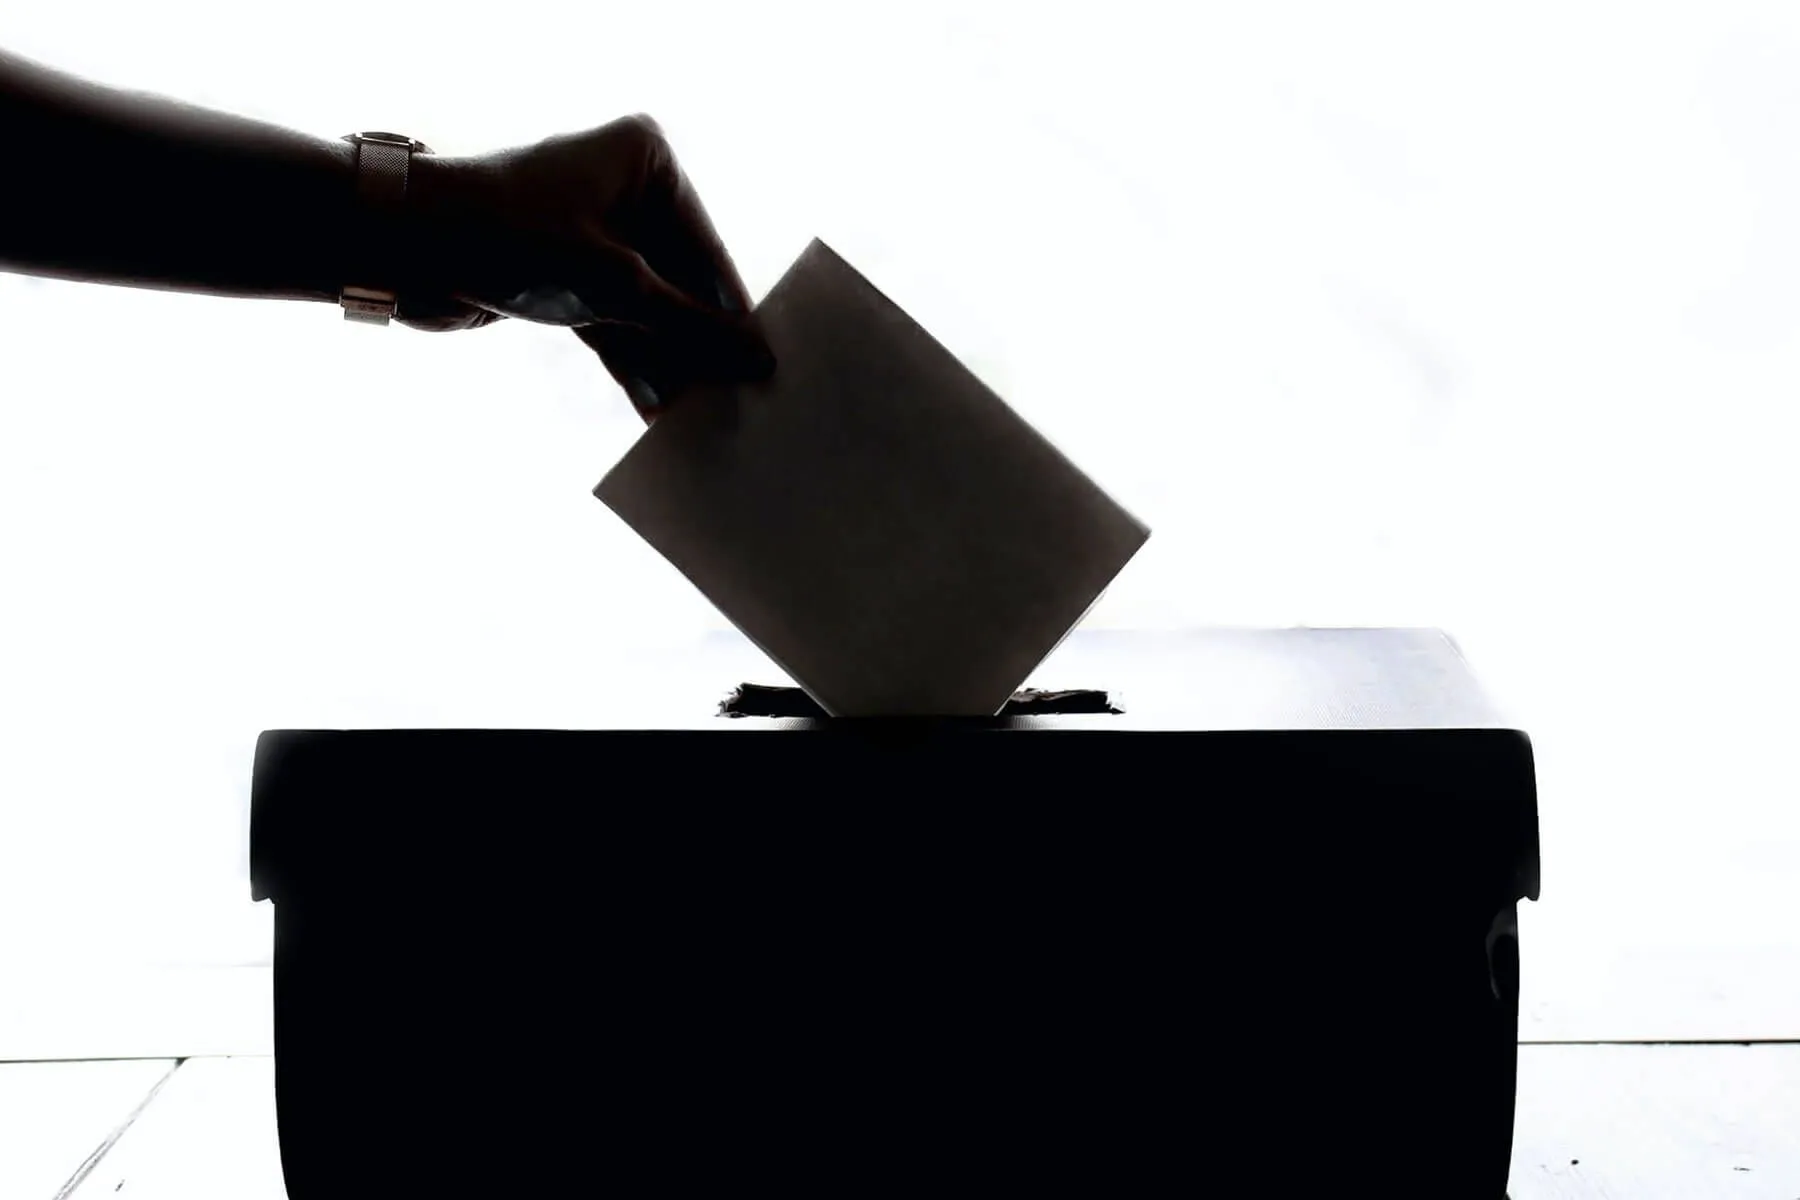 A person casting a voting ballot